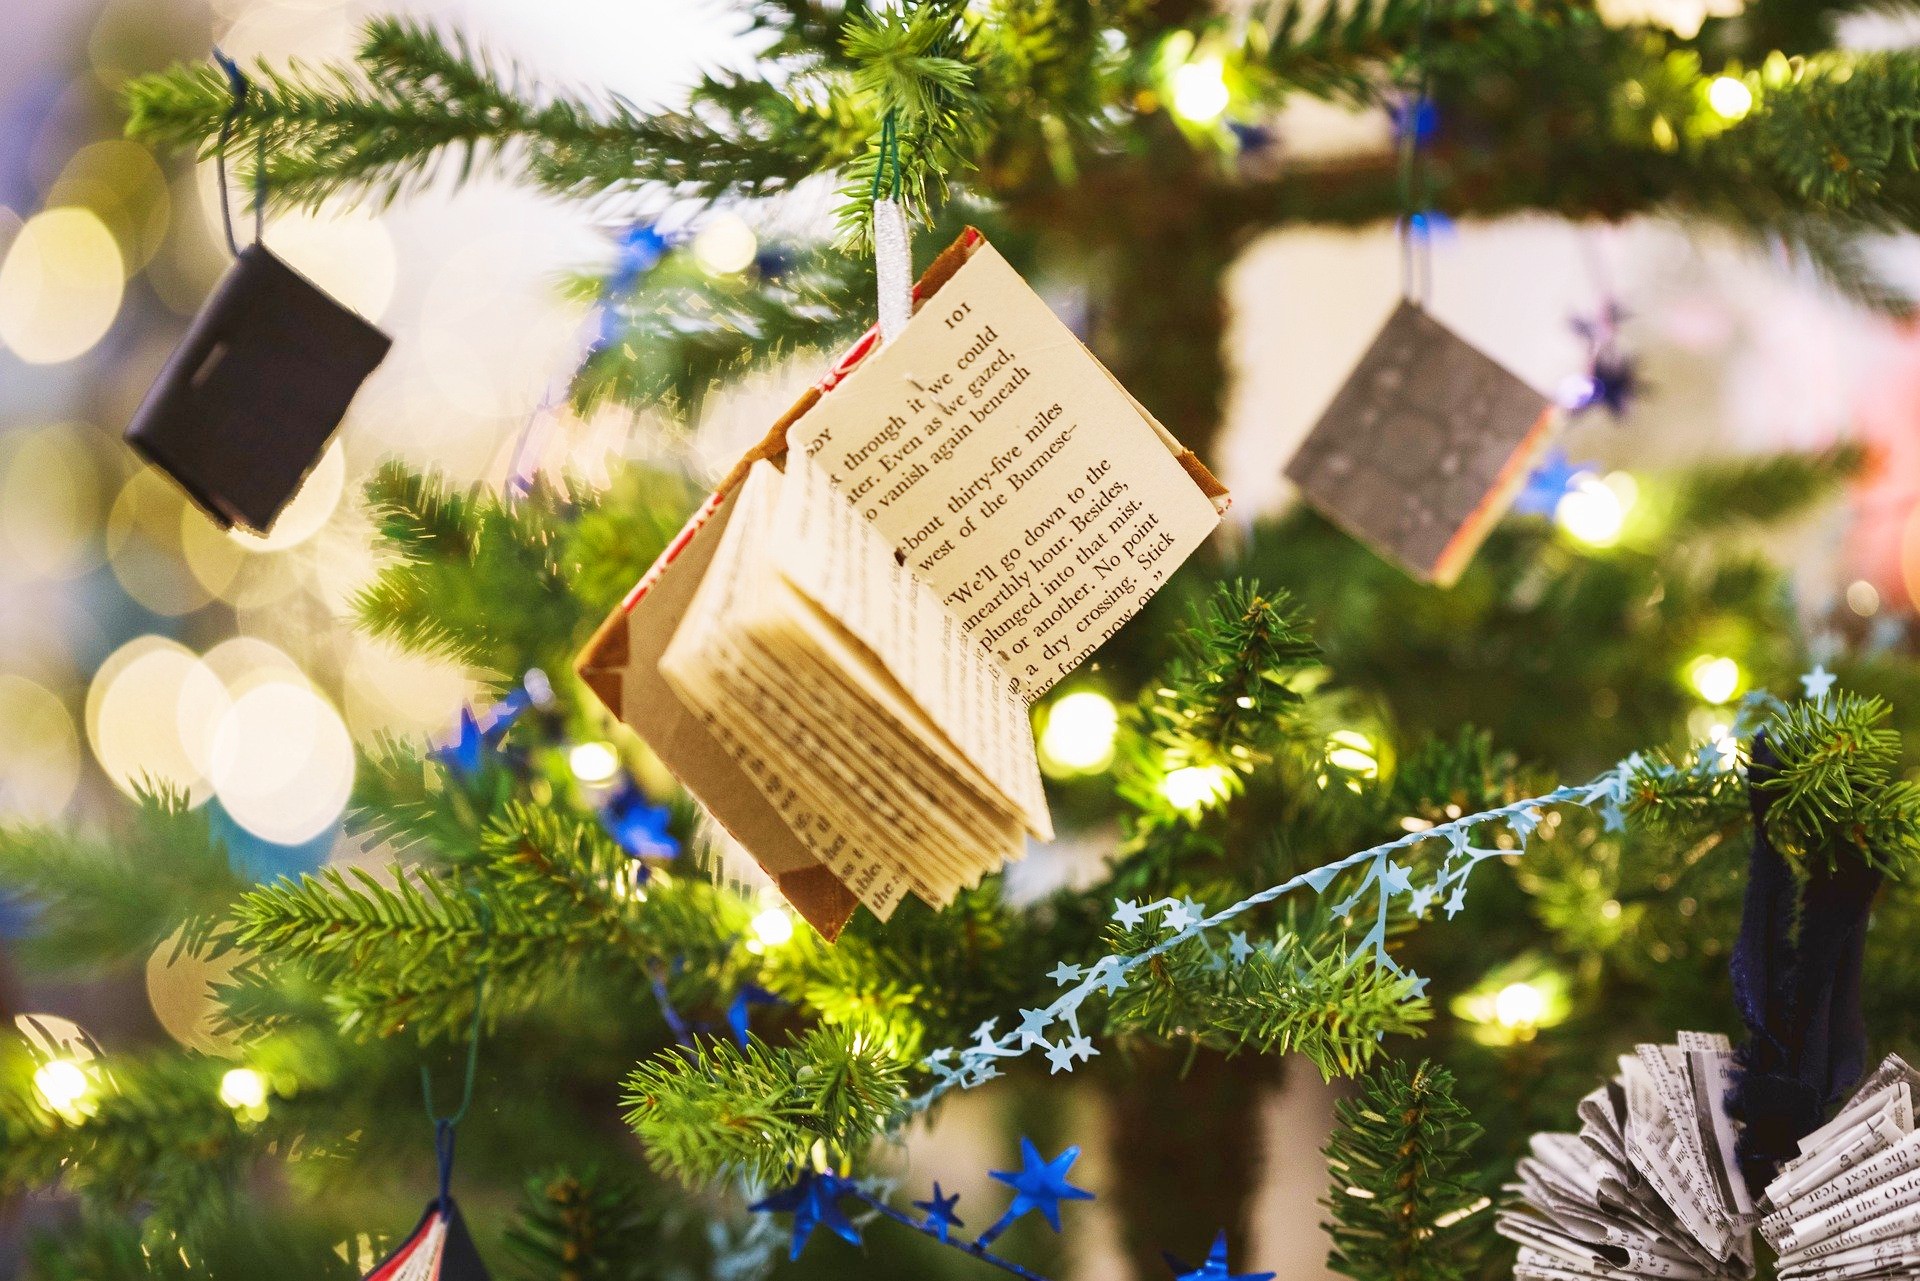 <img src="book.jpg" alt="book decorations in Christmas tree"/> 